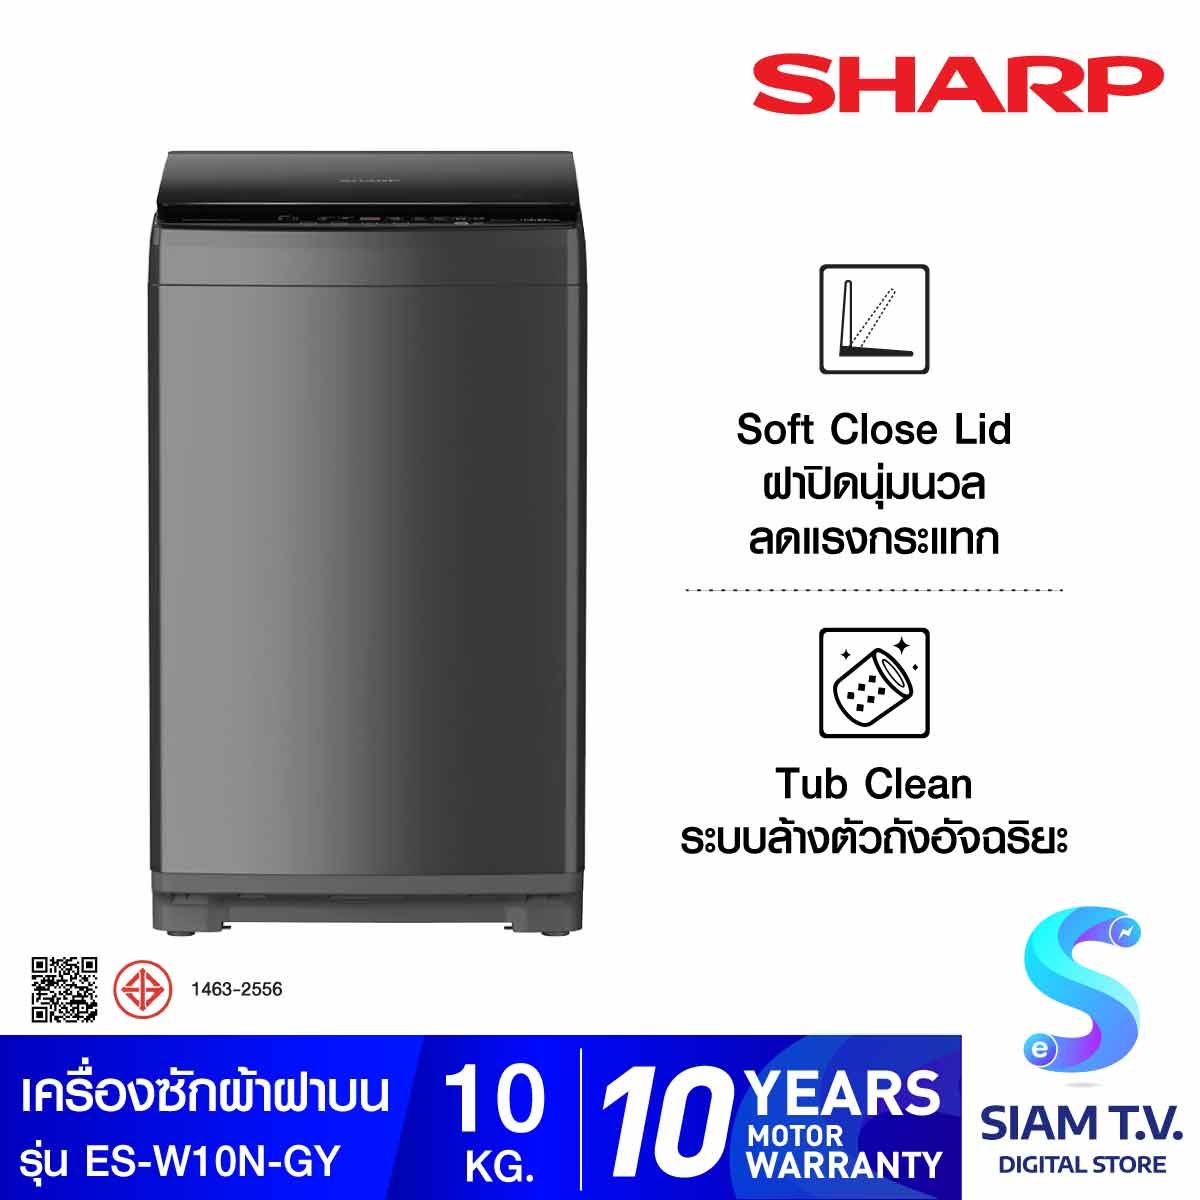 SHARP เครื่องซักผ้าฝาบน 10 Kg. สีเทา รุ่นES-W10N-GY